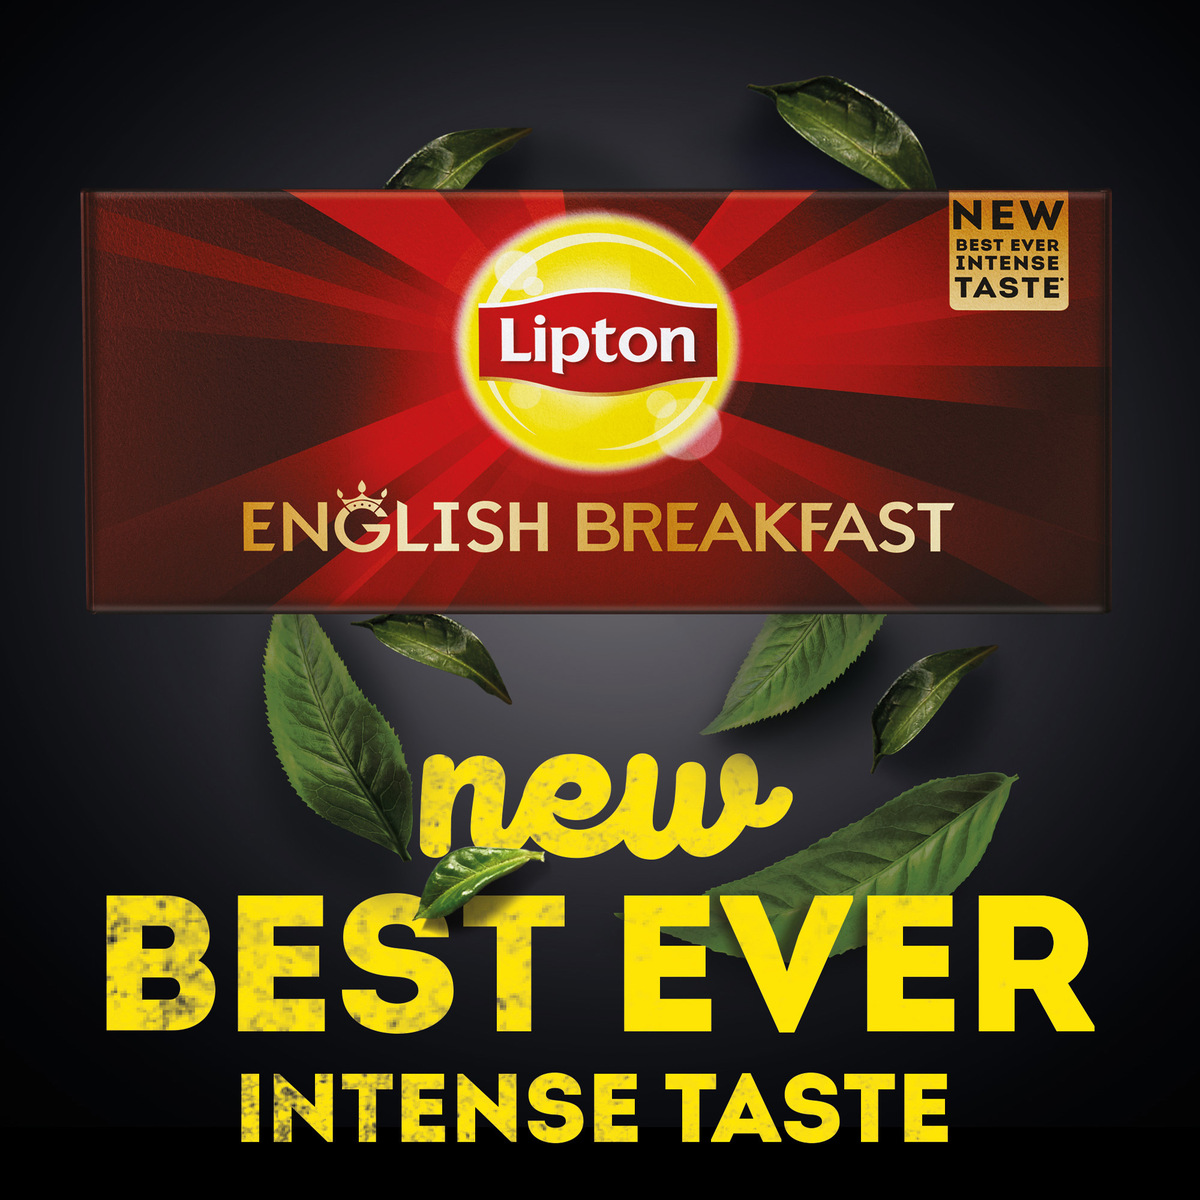 Lipton Black Tea English Breakfast Envelope 25 Teabags